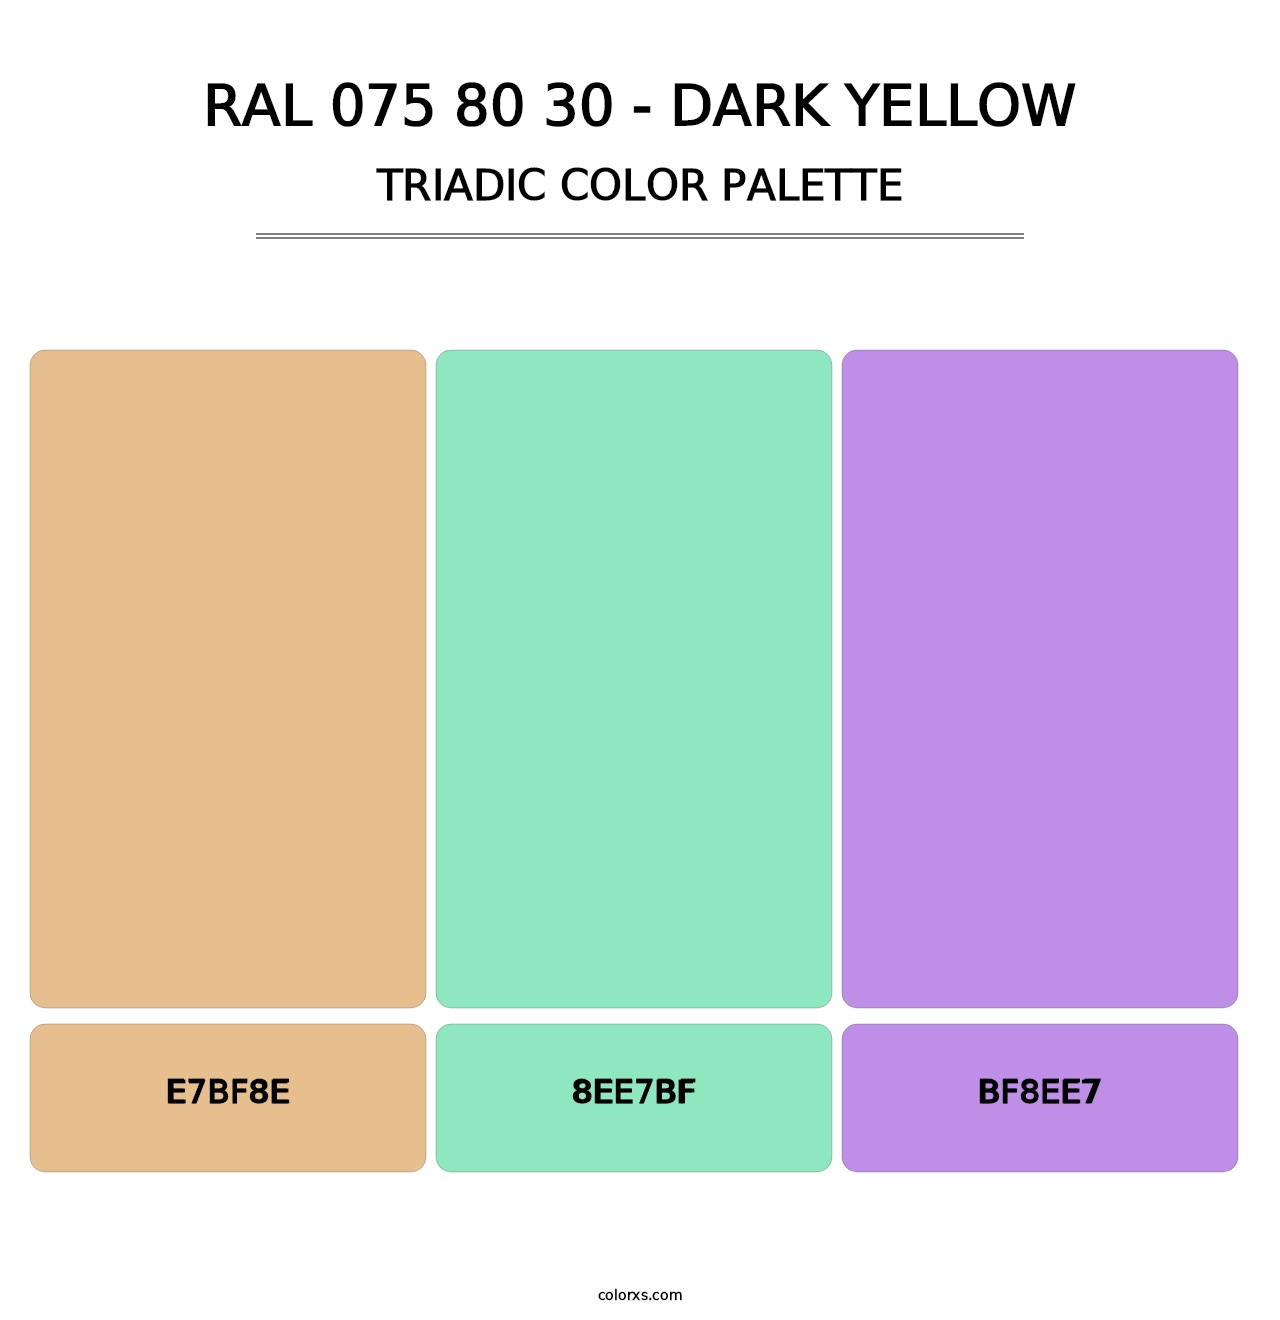 RAL 075 80 30 - Dark Yellow - Triadic Color Palette